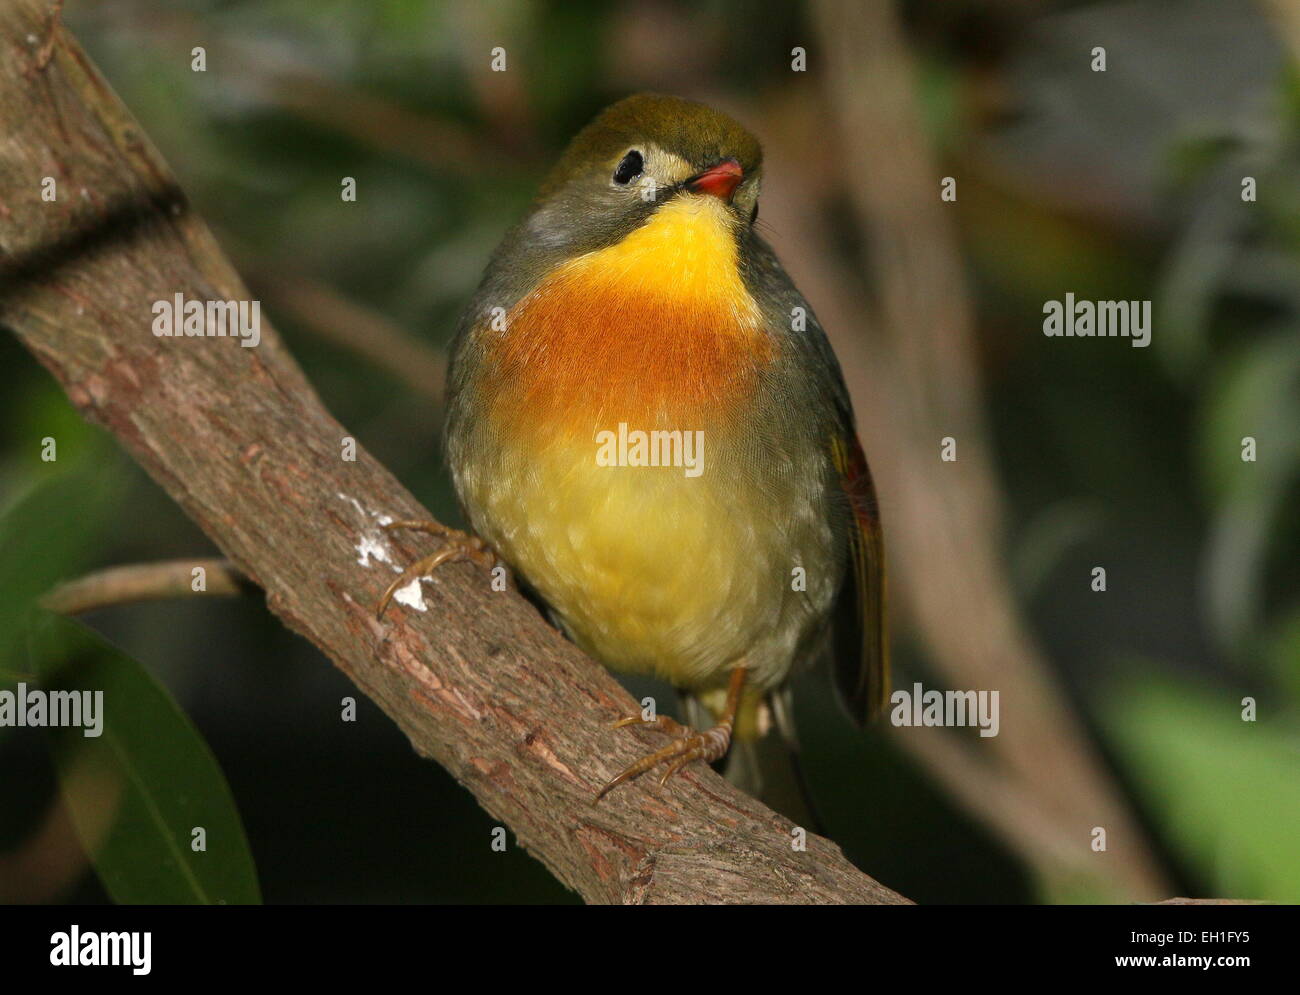 Asian Red-billed Leiothrix ou Pekin Nightingale (Leiothrix lutea). A.k.a. Pekin (Hill) robin ou Japonais rossignol. Banque D'Images